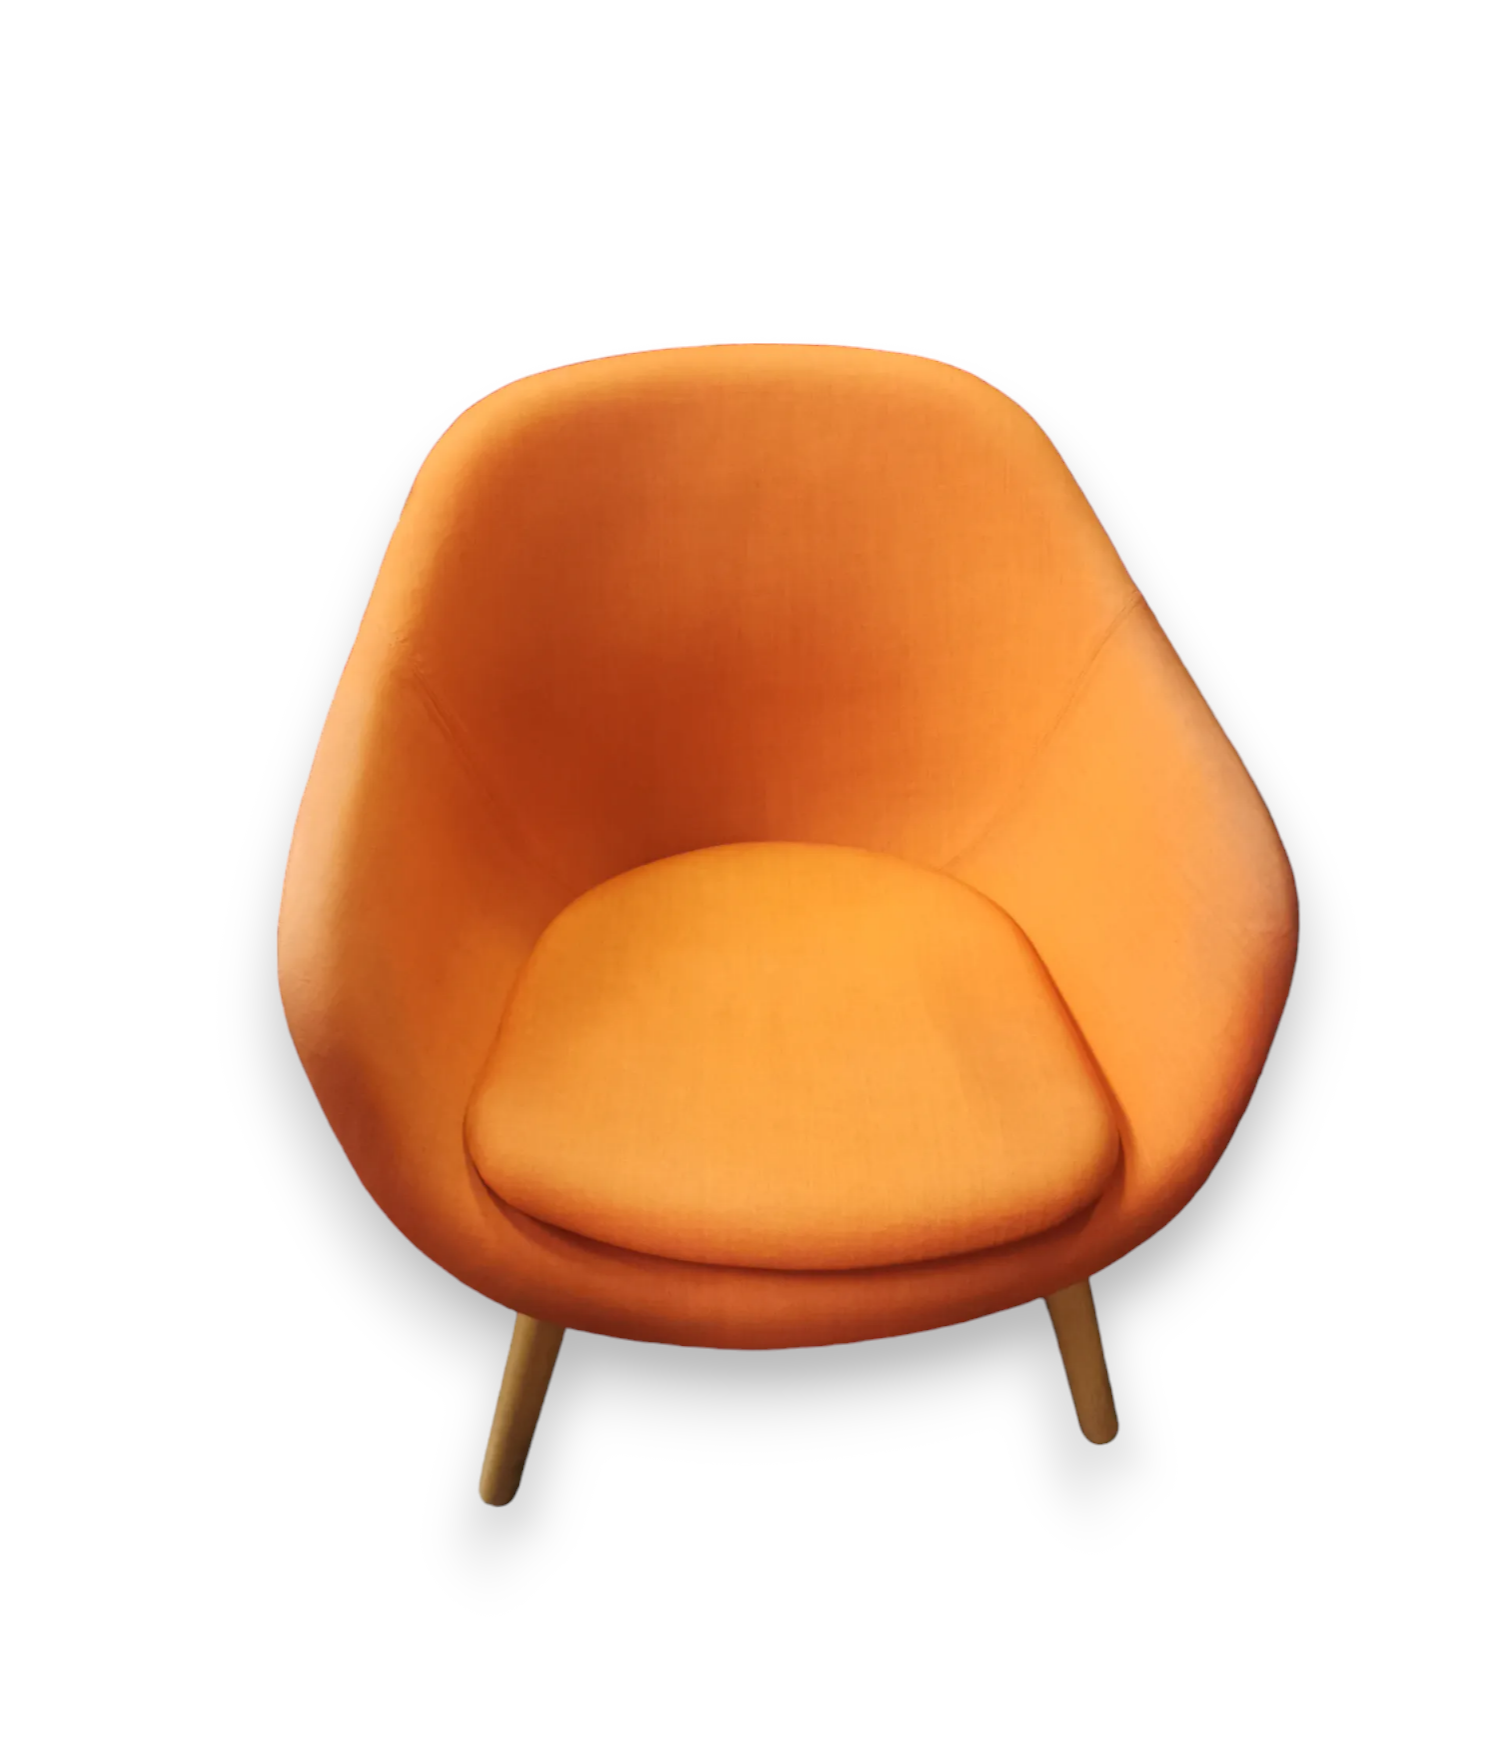 Orange armchair on wooden legs - Relieve Furniture